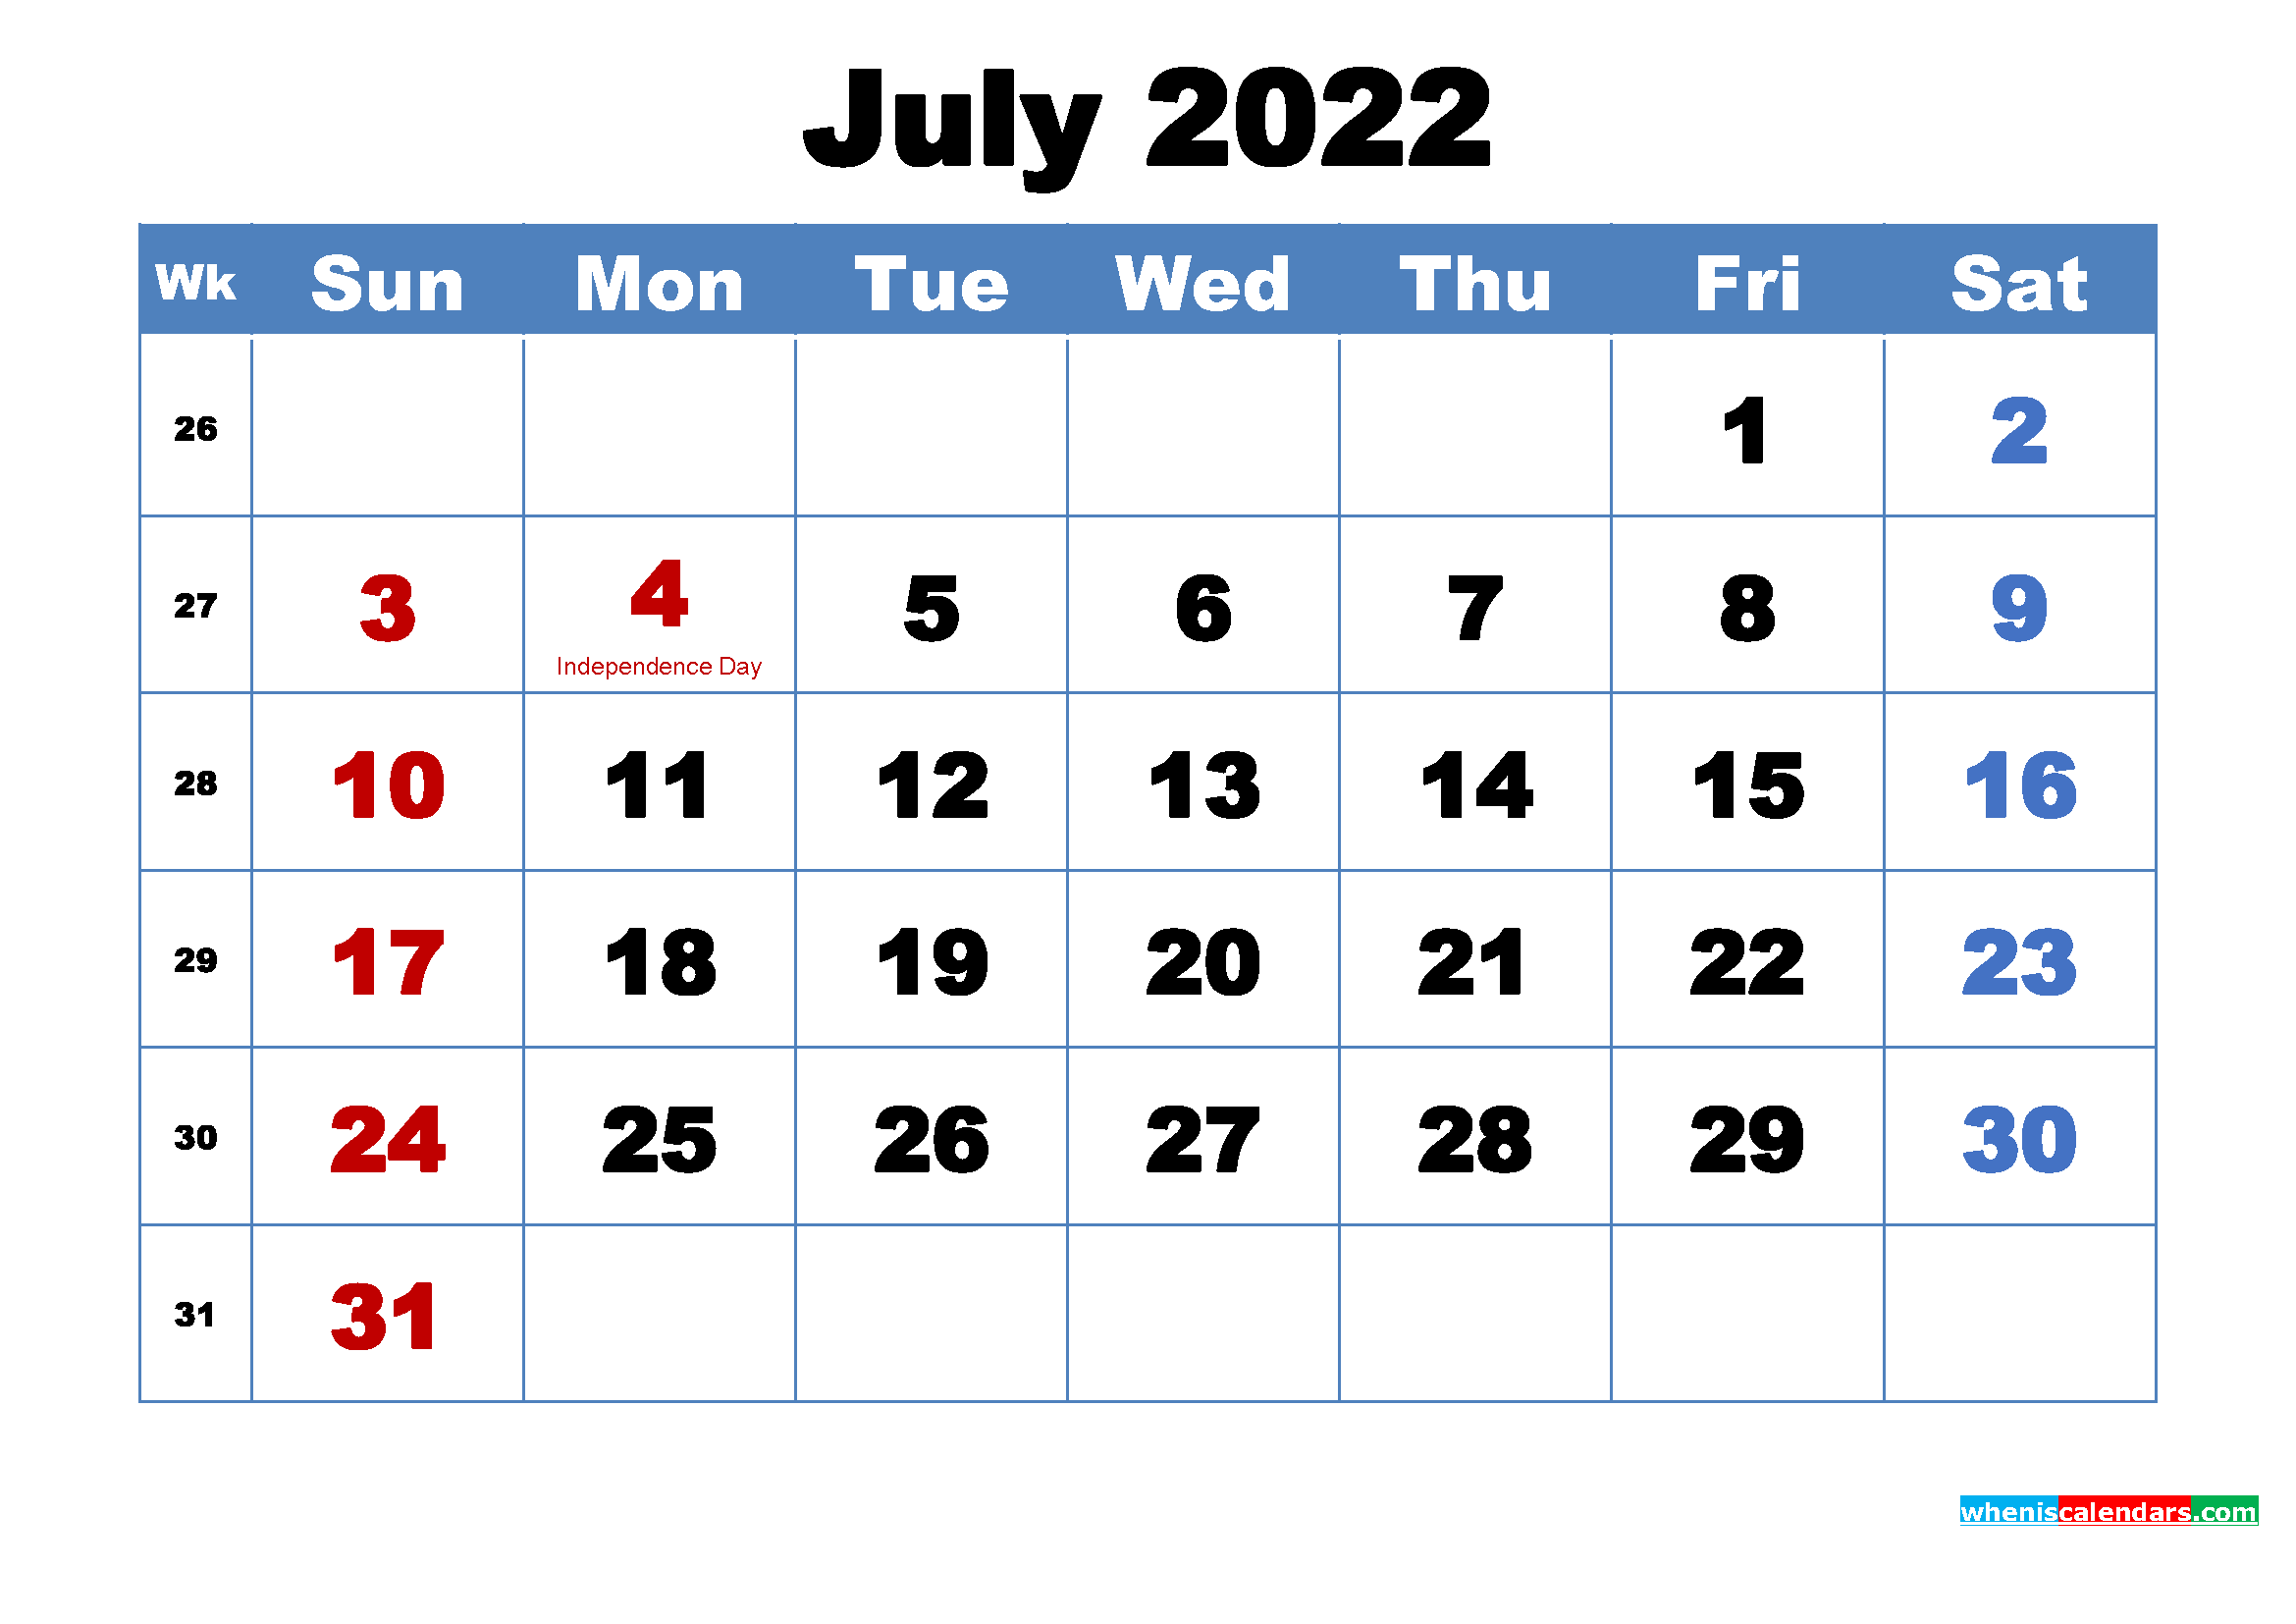 July 2022 Calendar Wallpaper Free Download